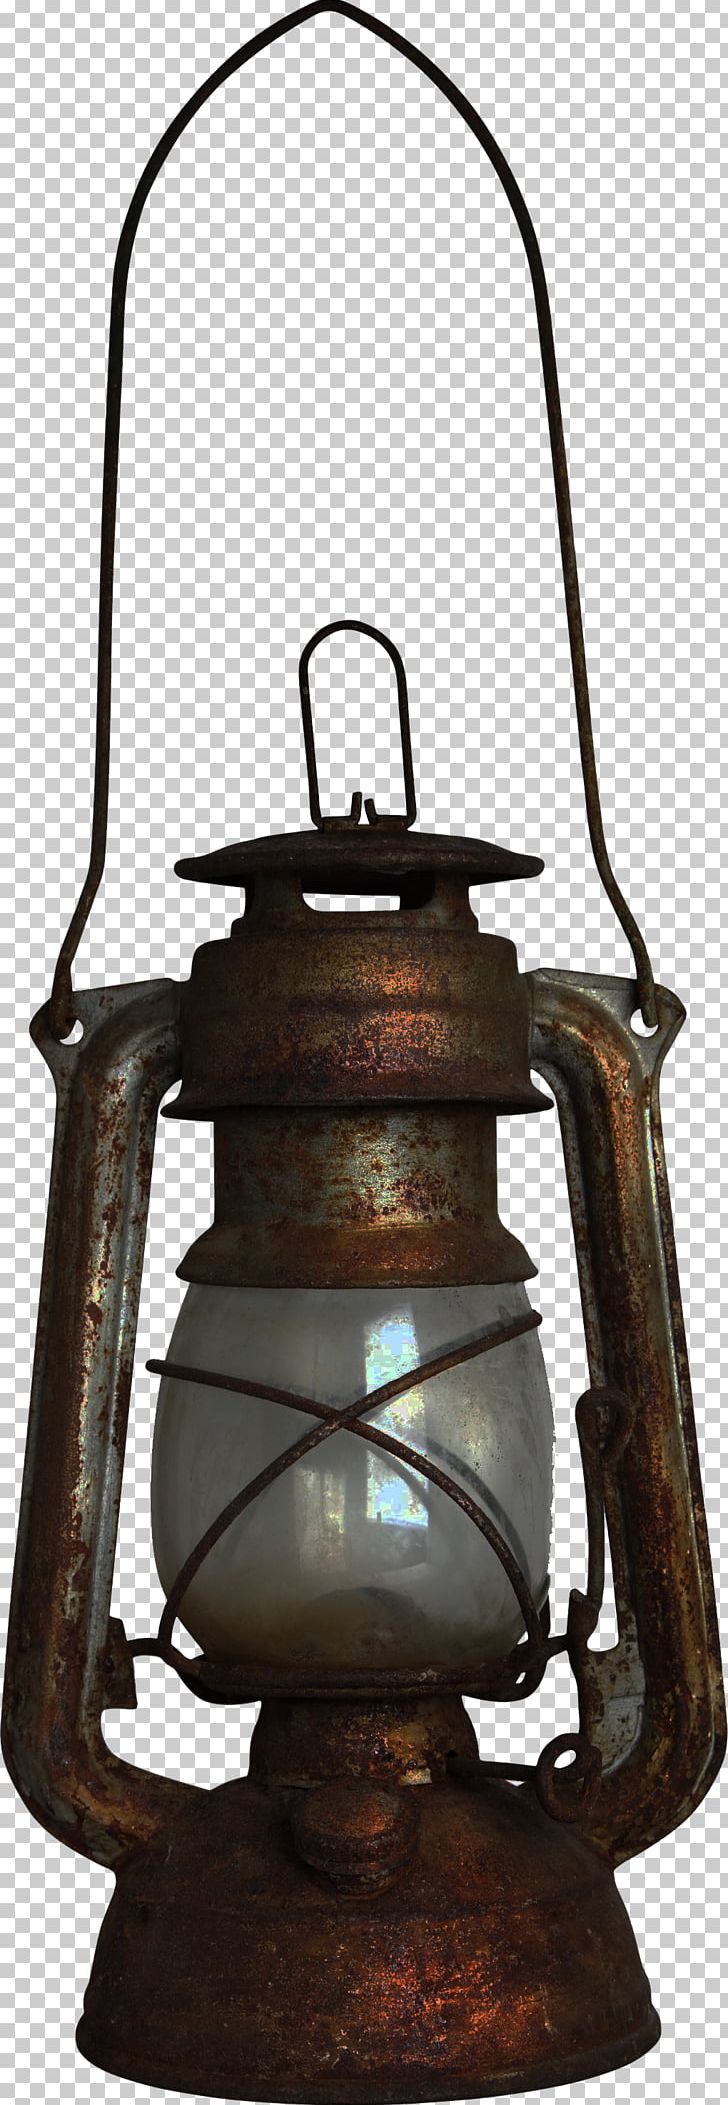 Light Oil Lamp Kerosene Lamp Lantern PNG, Clipart, Gas Lighting, Kerosene, Kettle, Lamp, Lamps Free PNG Download